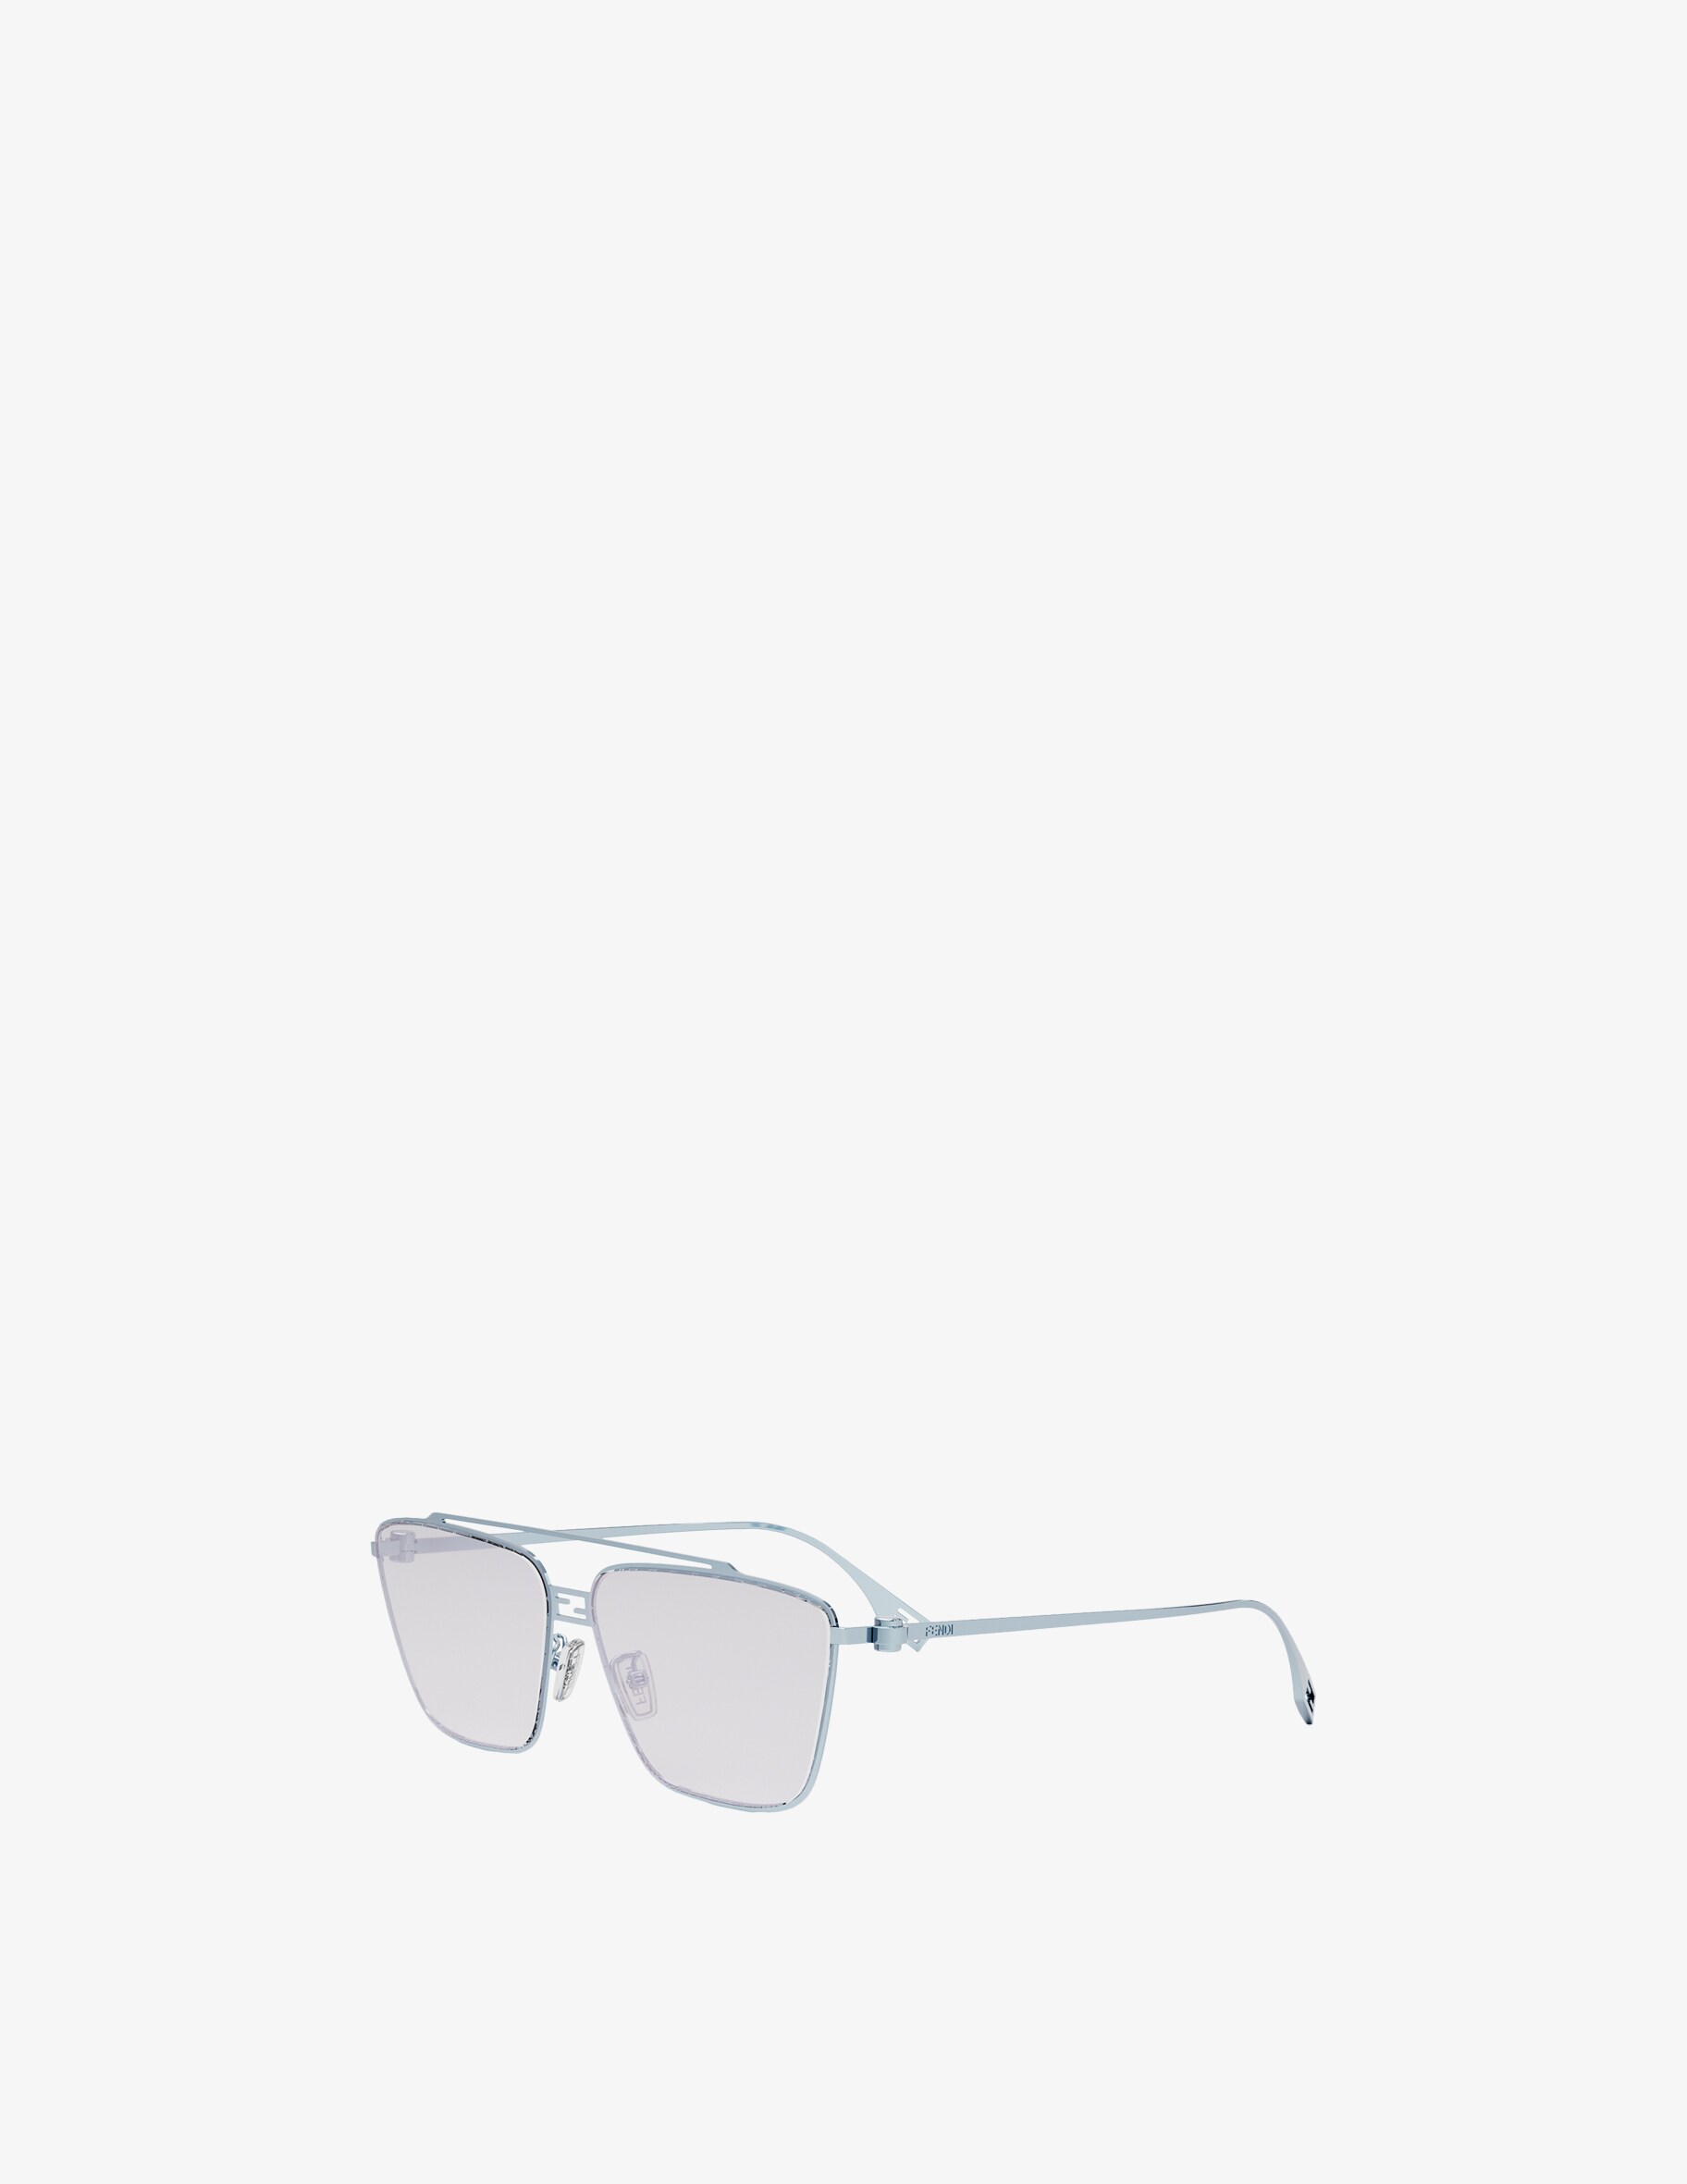 Солнцезащитные очки FE40110U в квадратной оправе Fendi, цвет Shiny Light Blue